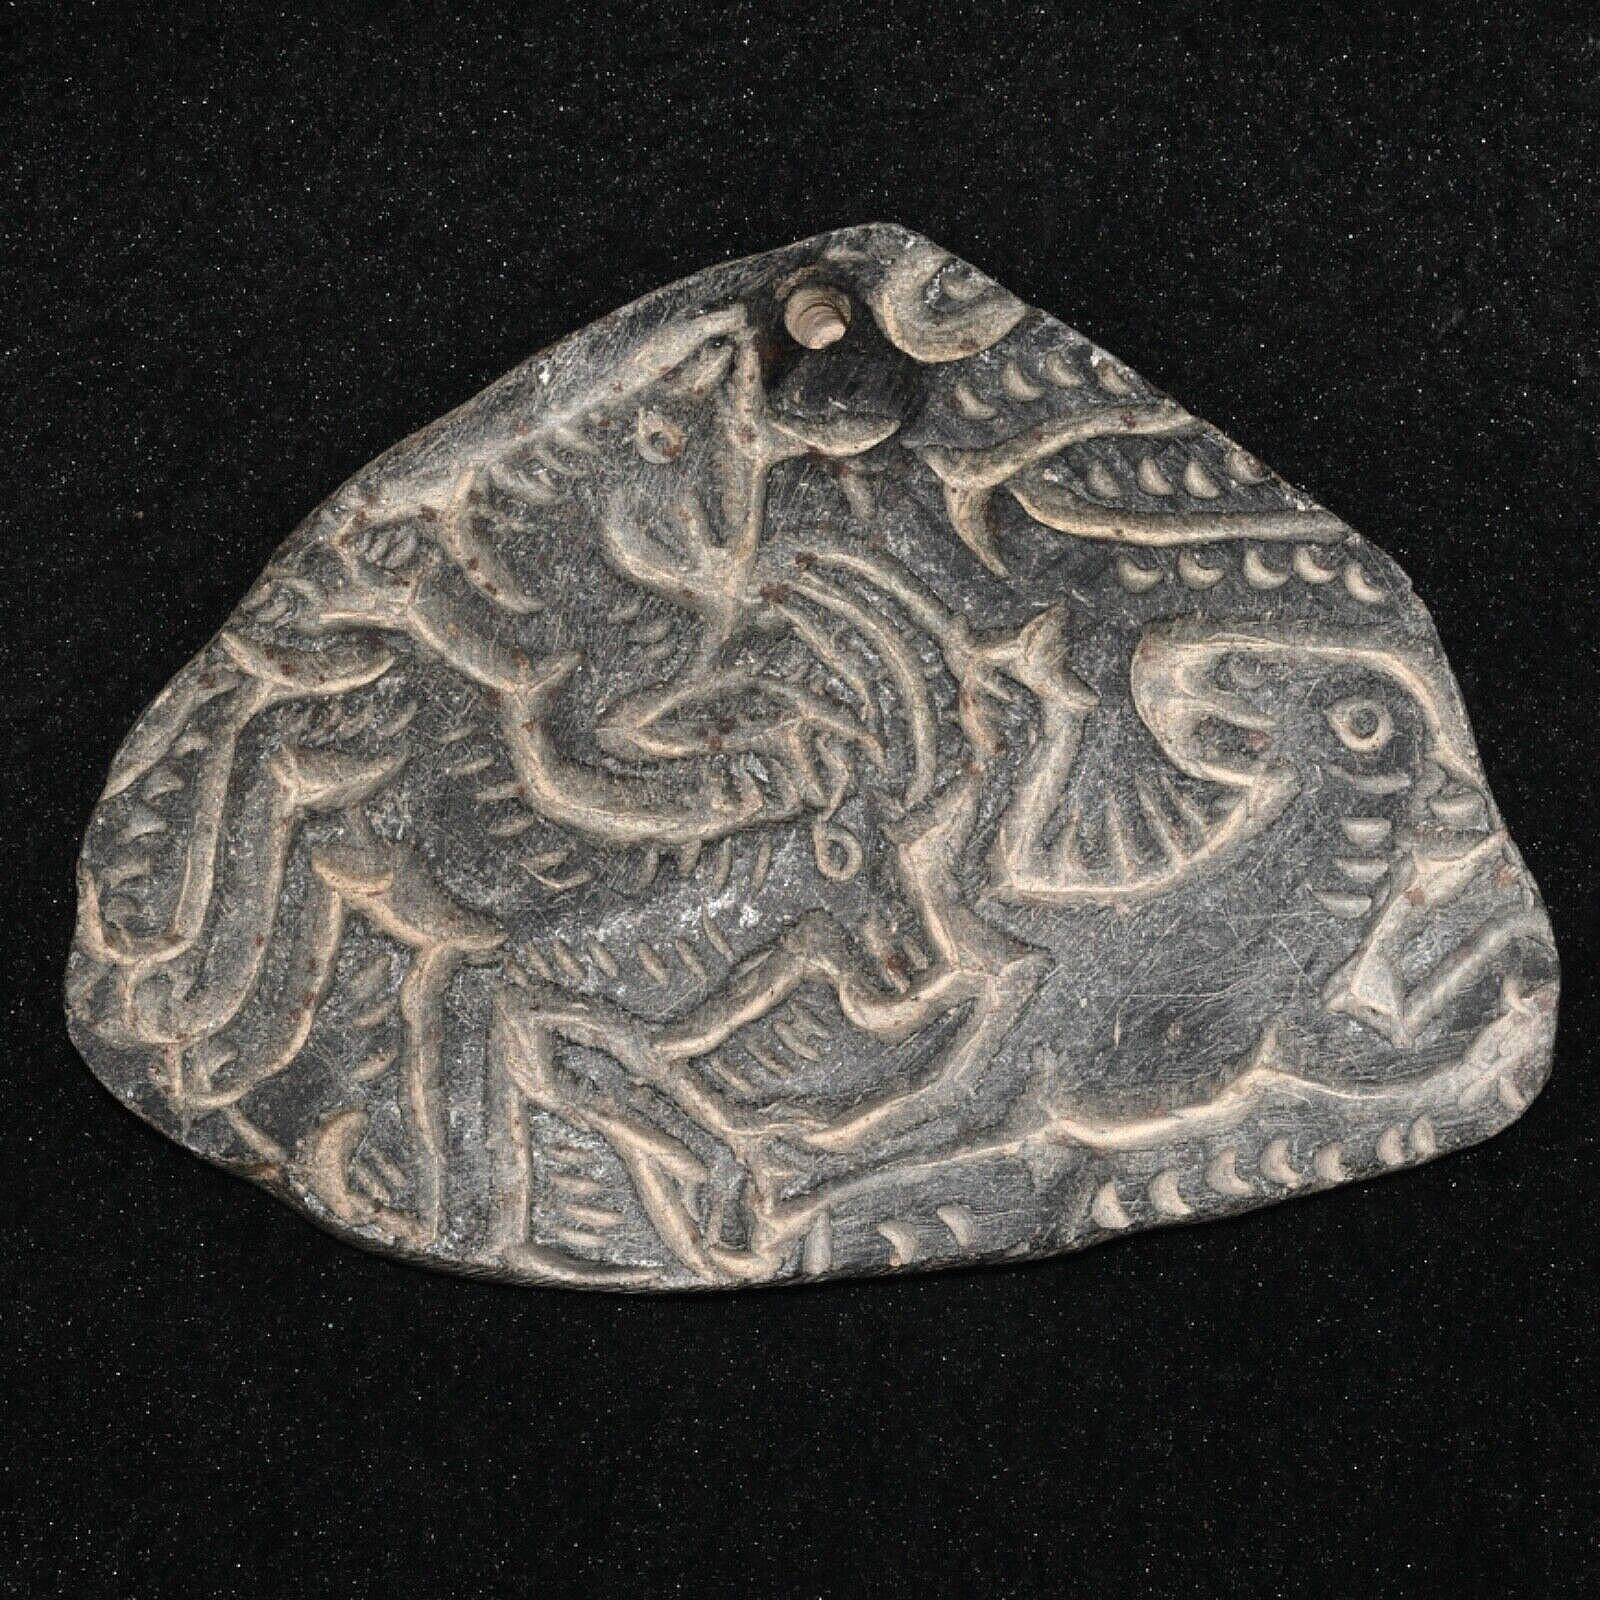 Genuine Ancient Jiroft Civilization Stone Relieve Tile Pendant in Good Condition